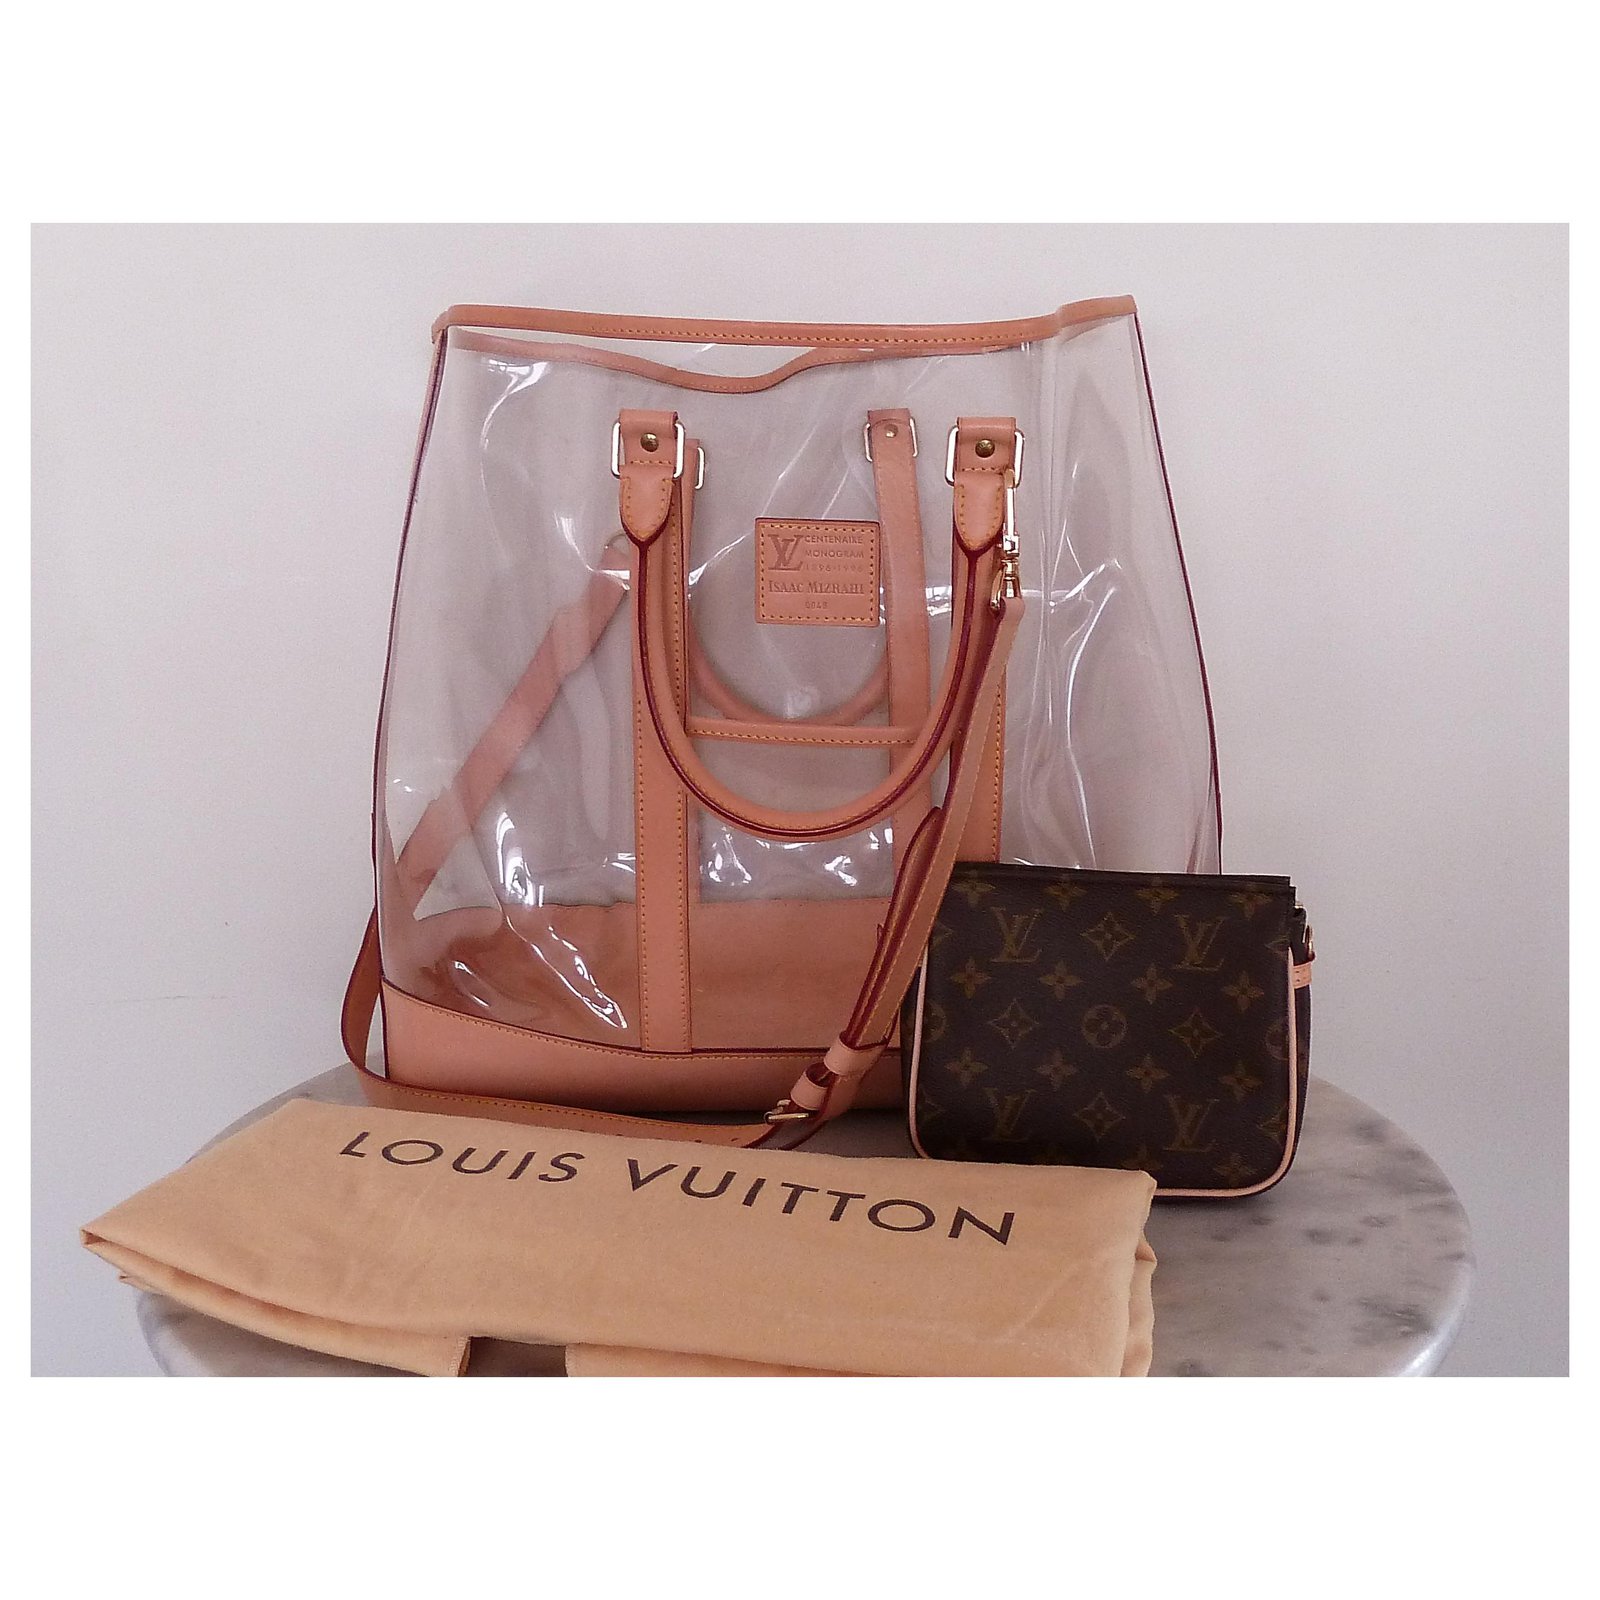 Mizhattan - Sensible living with style: ALERT: Louis Vuitton Price